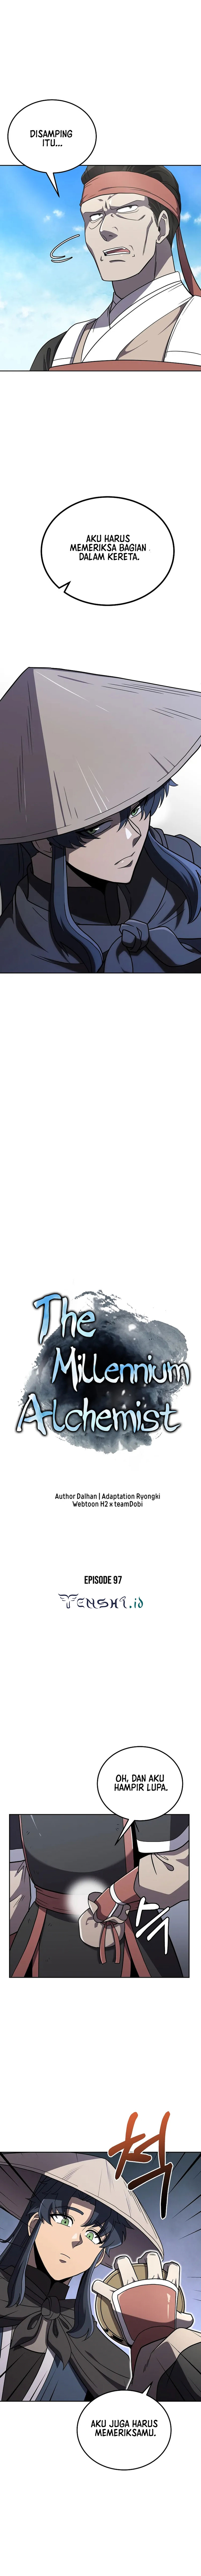 Millennium Spinning Chapter 97 - 107